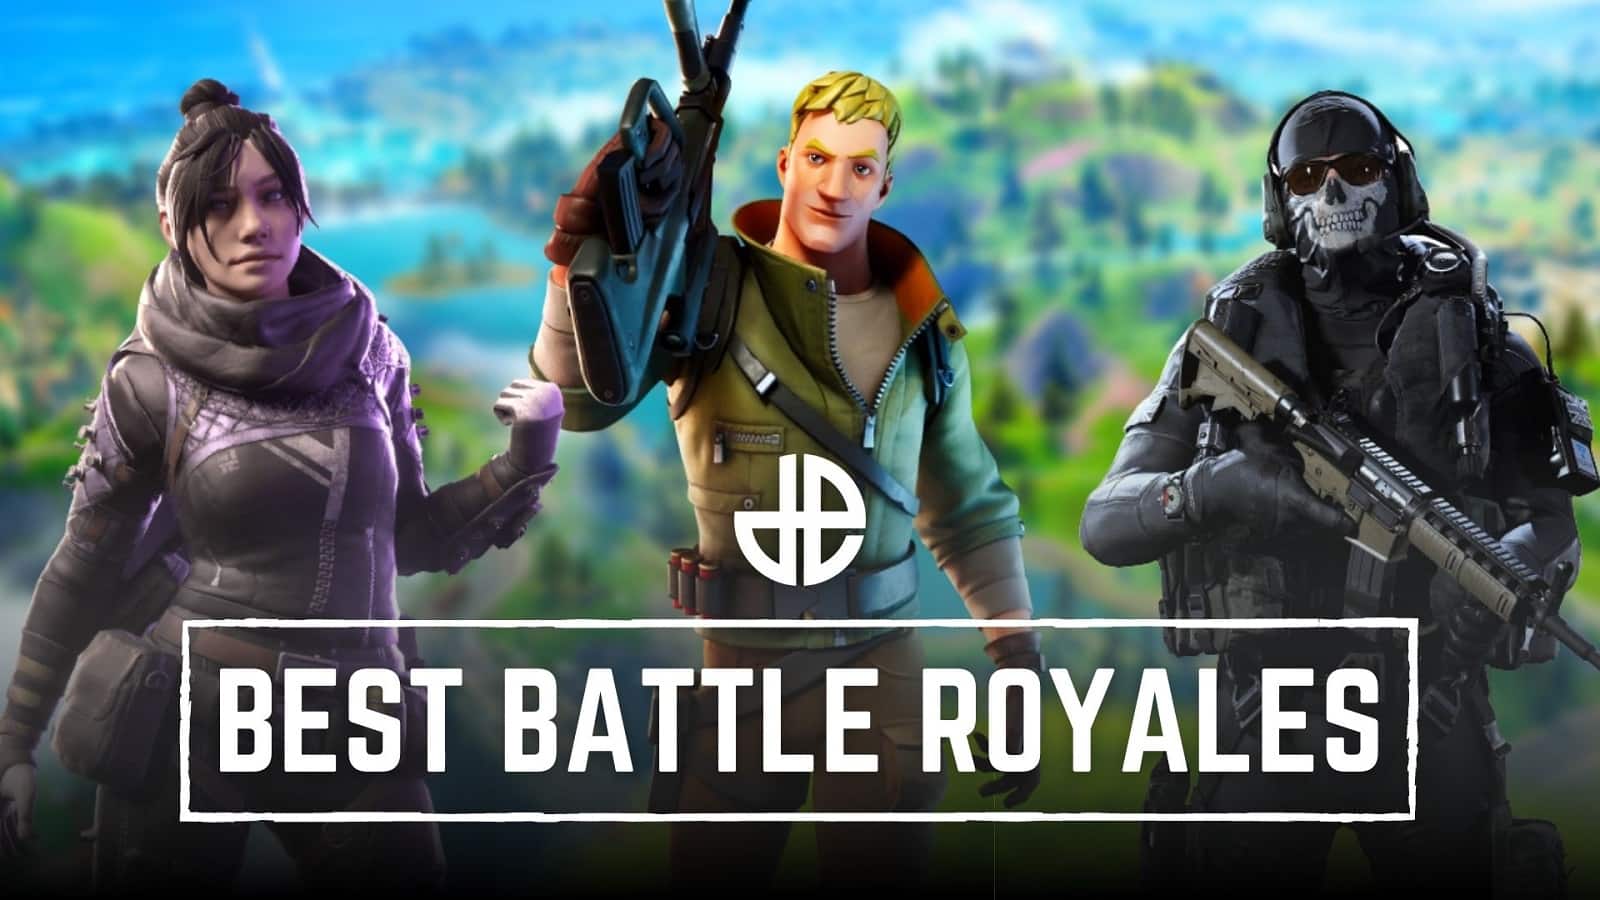 The 8 Best Battle Royale Games